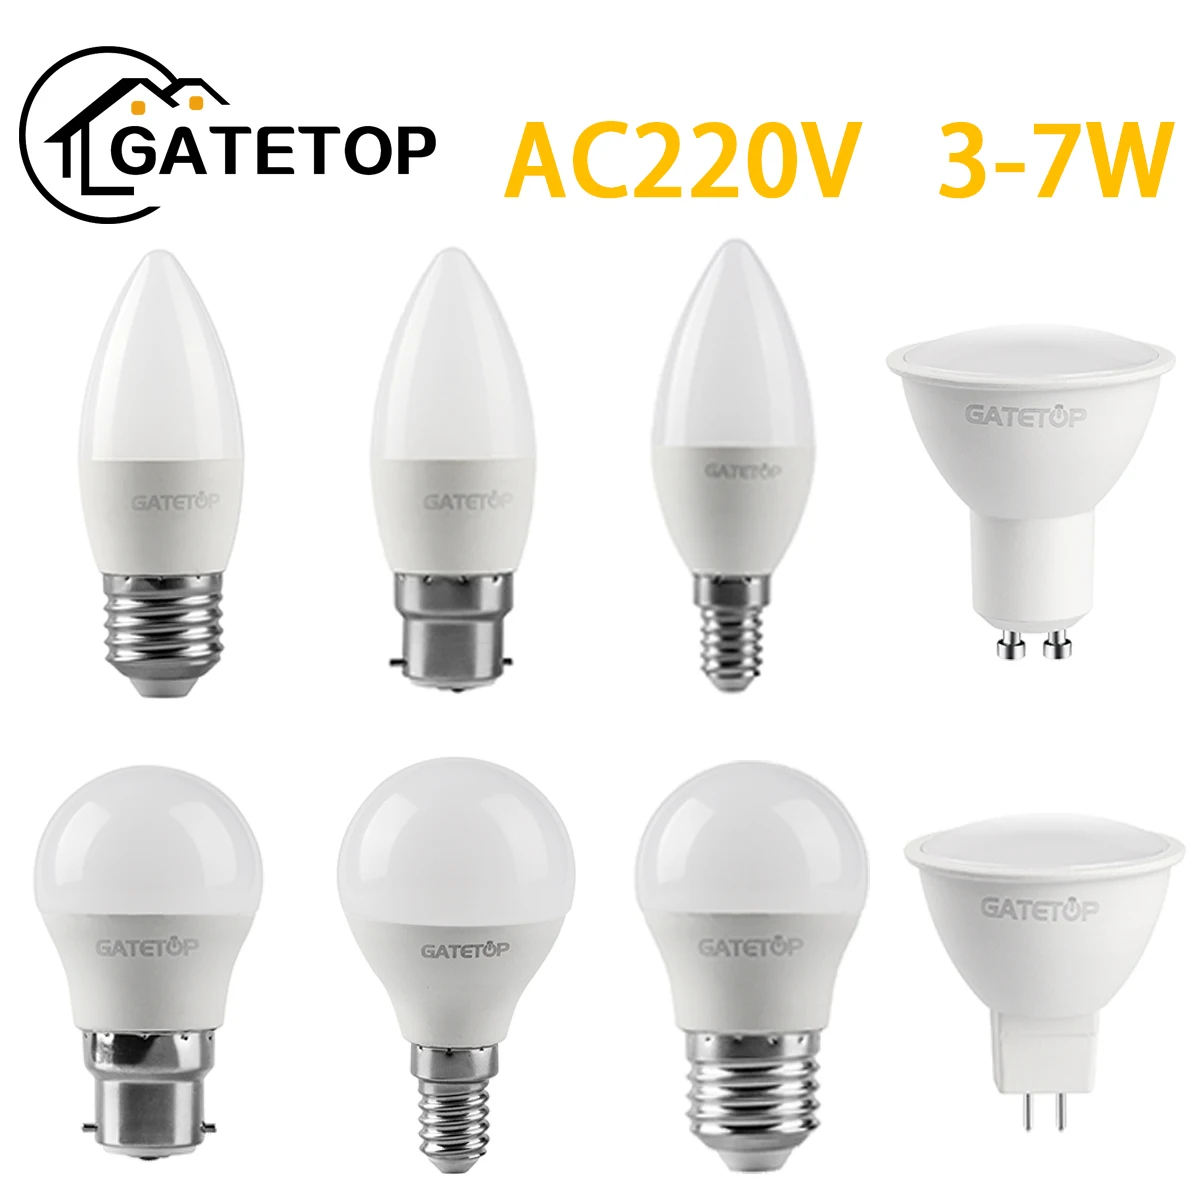 

10PCS Factory direct LED light bulb candle lamp G45 GU10 MR16 AC220V low power 3W-7W high lumen no strobe Apply to study kitchen